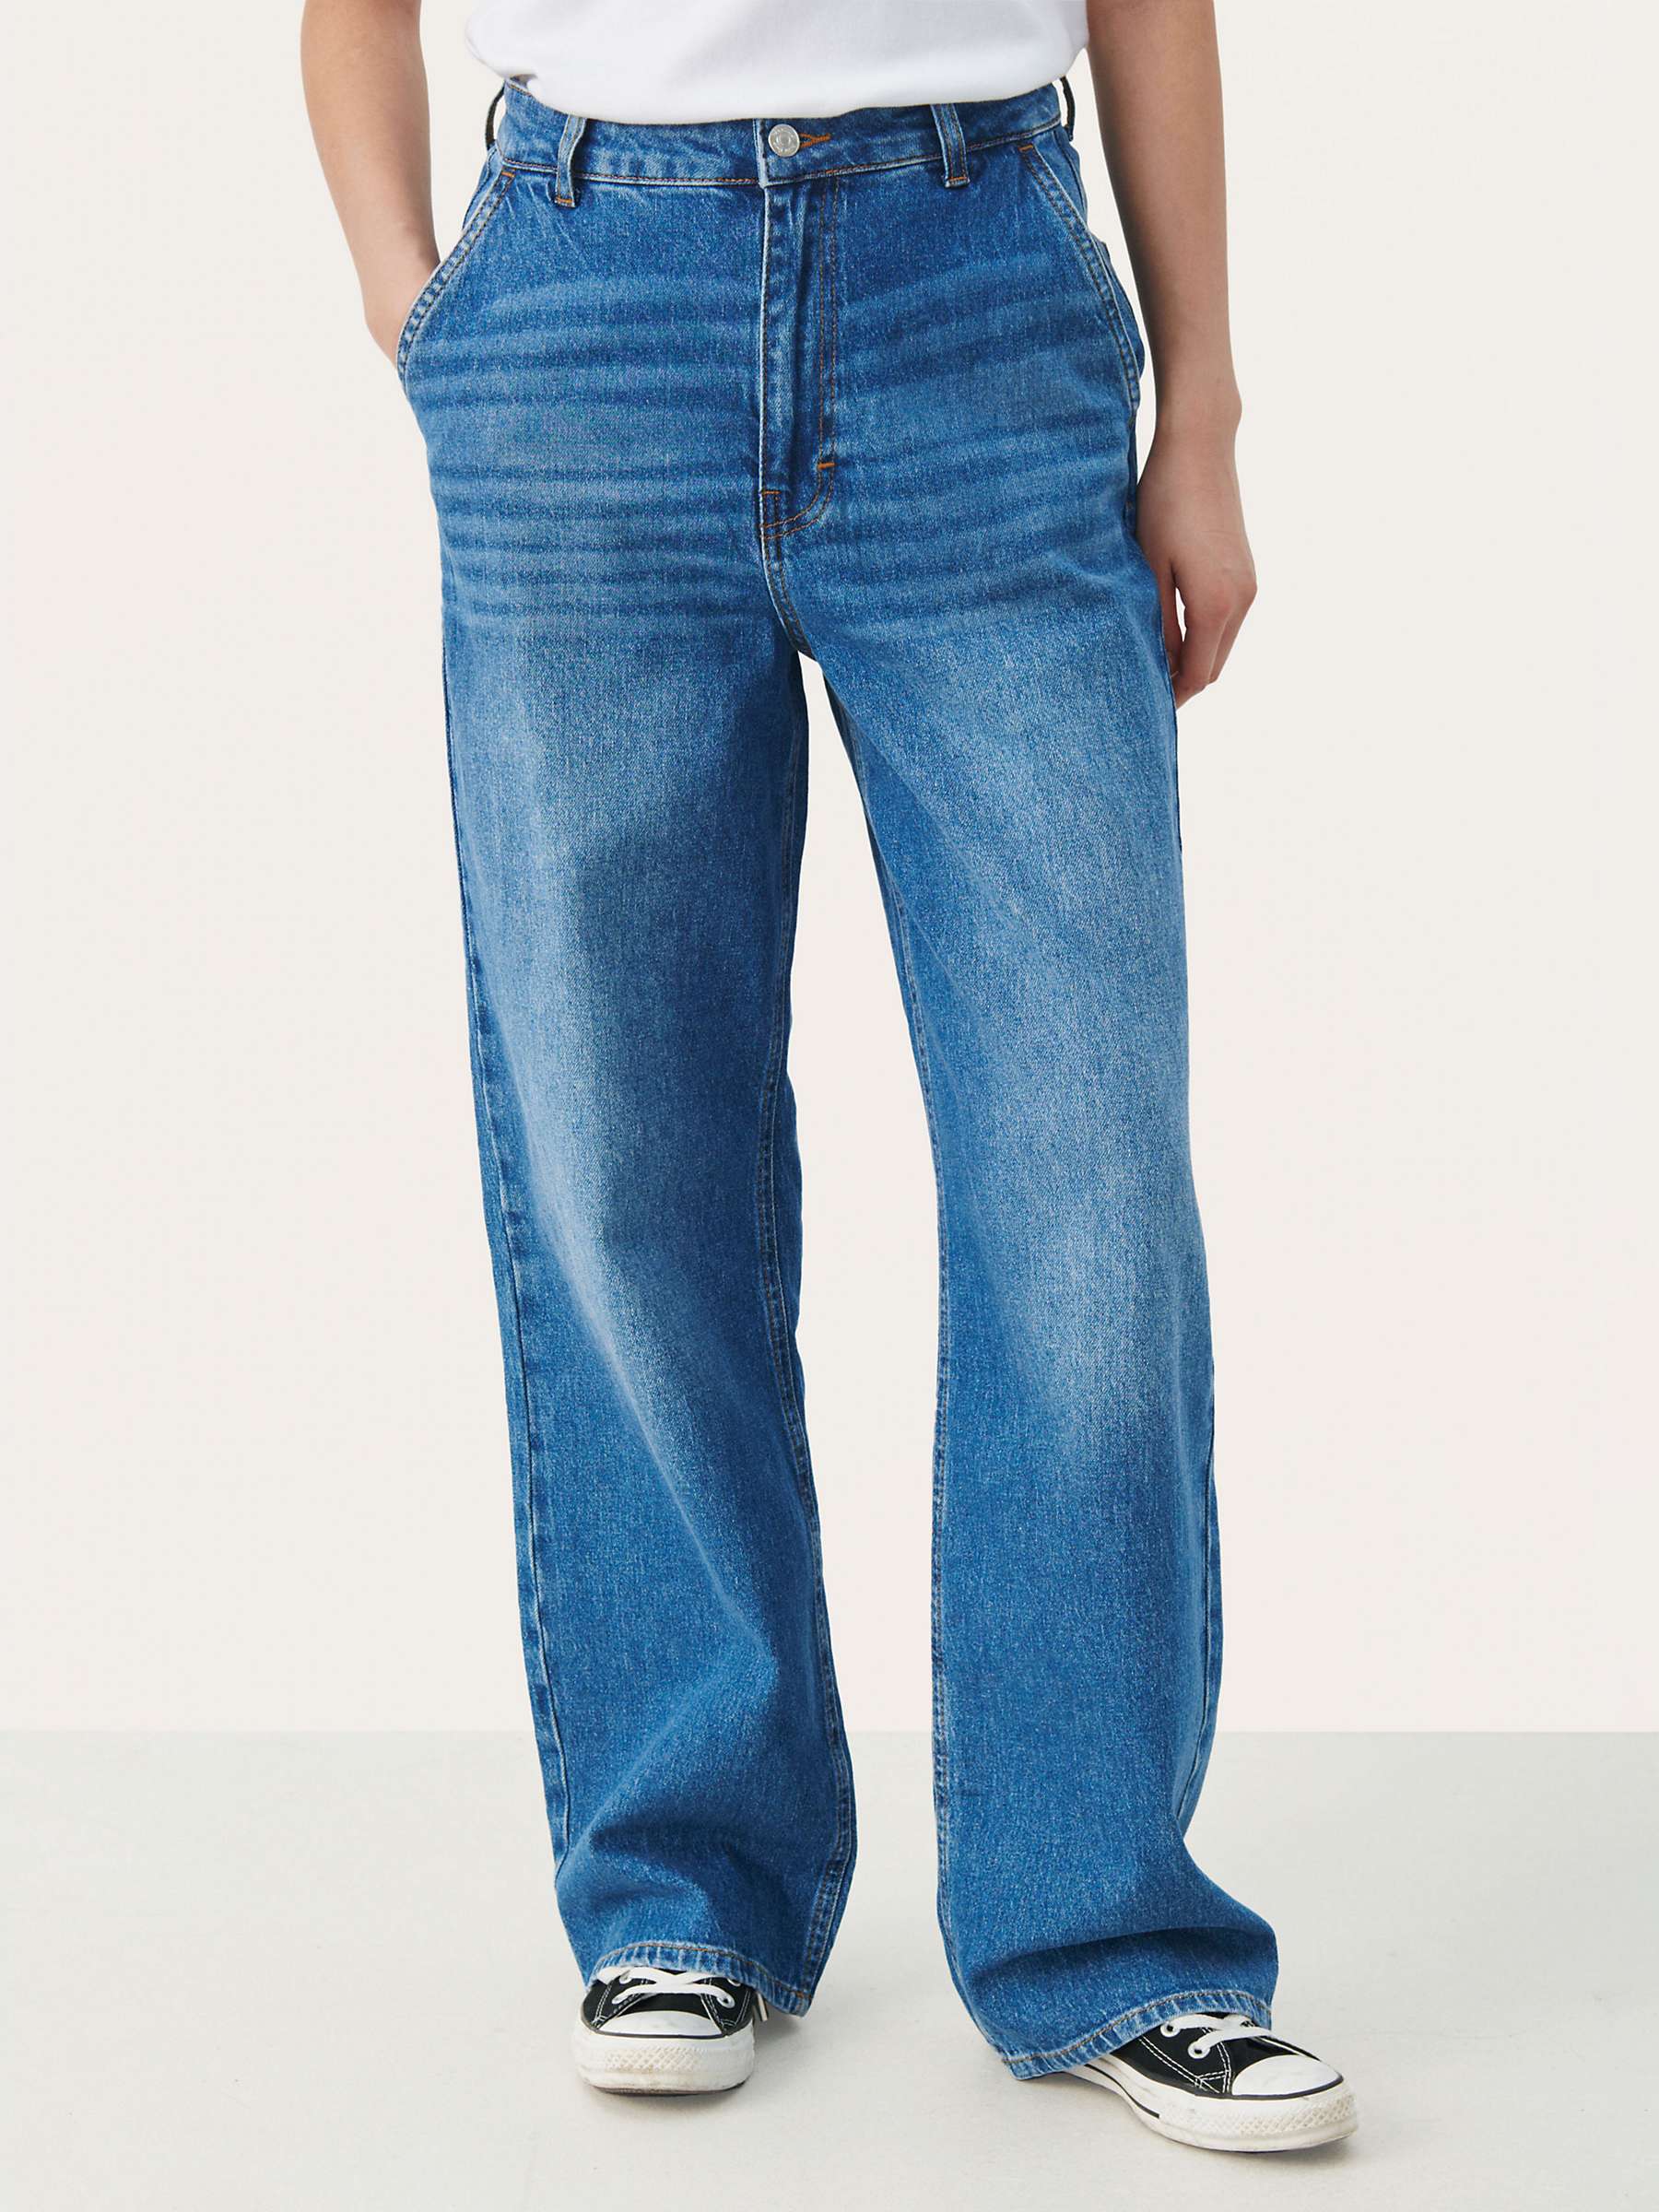 Buy Part Two Cassidy High Waist Regular Fit Jeans, Blue Online at johnlewis.com